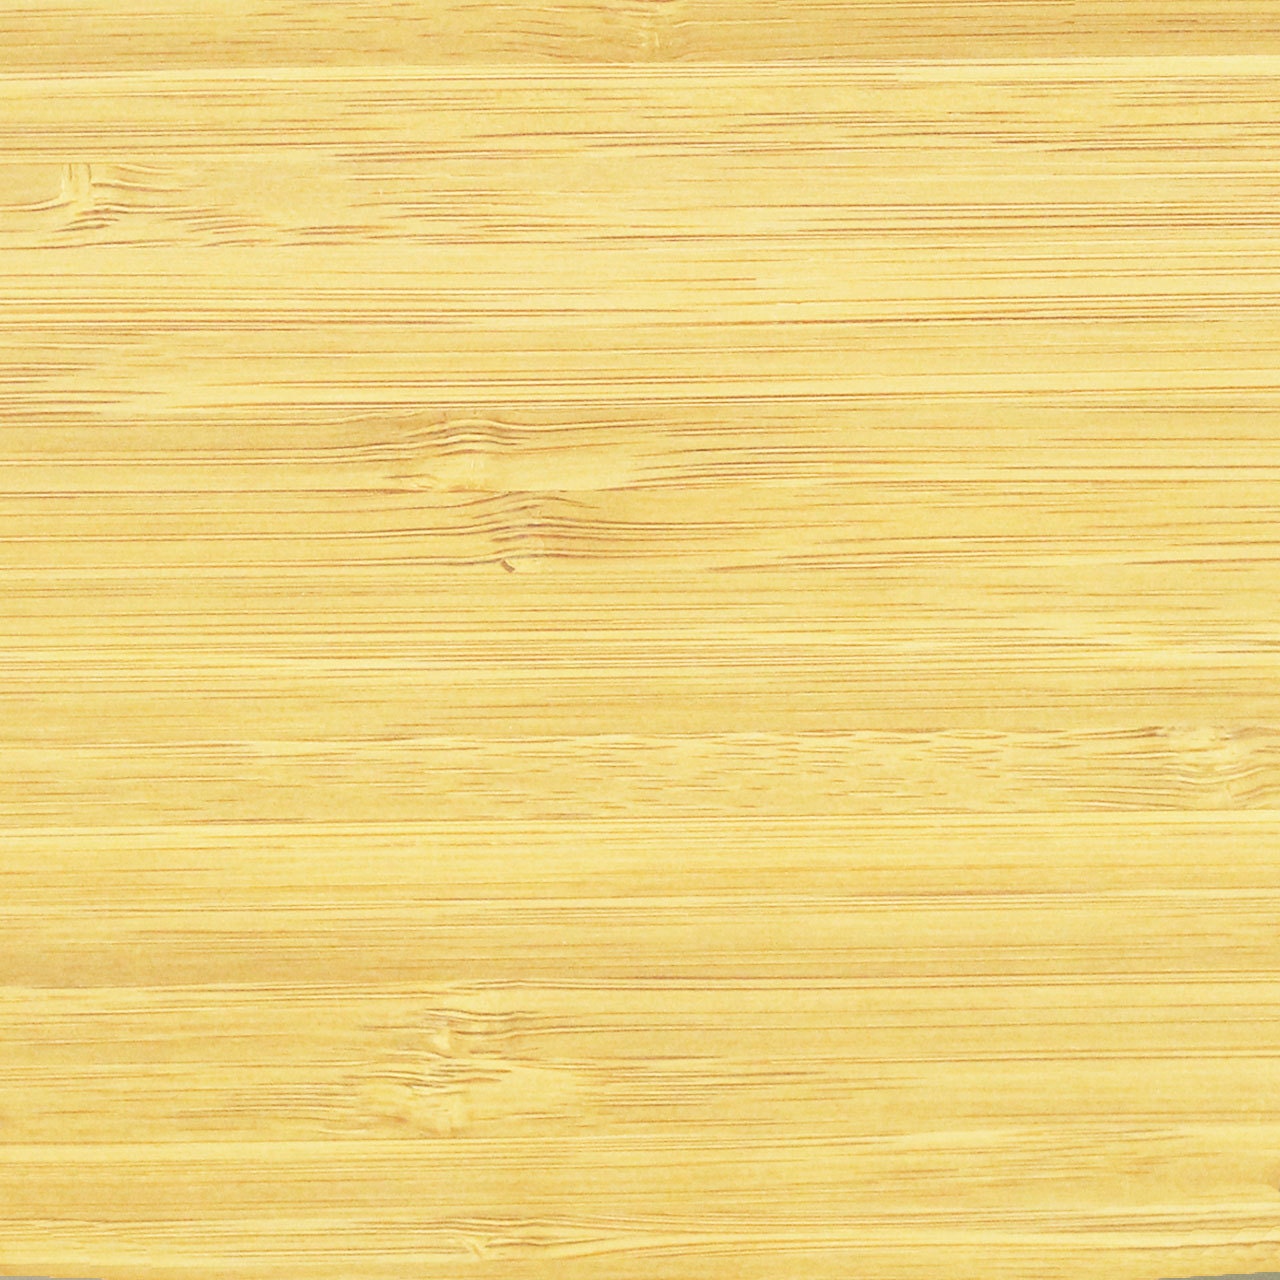 Bamboo Large Cutting Board – We Make It Personal Laser Engraving